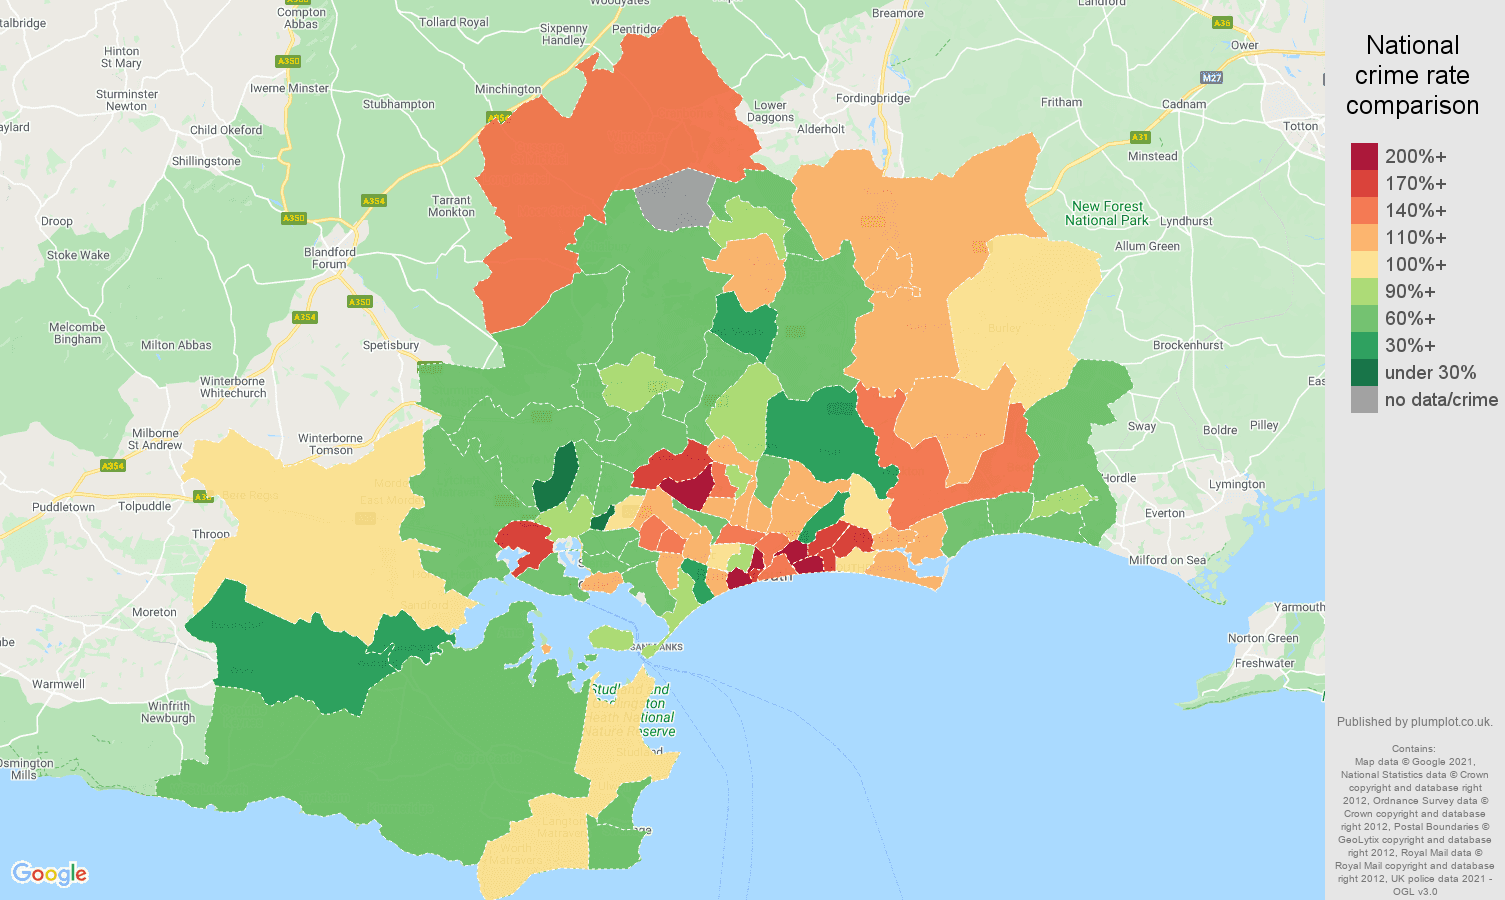 Bournemouth criminal damage and arson crime rate comparison map